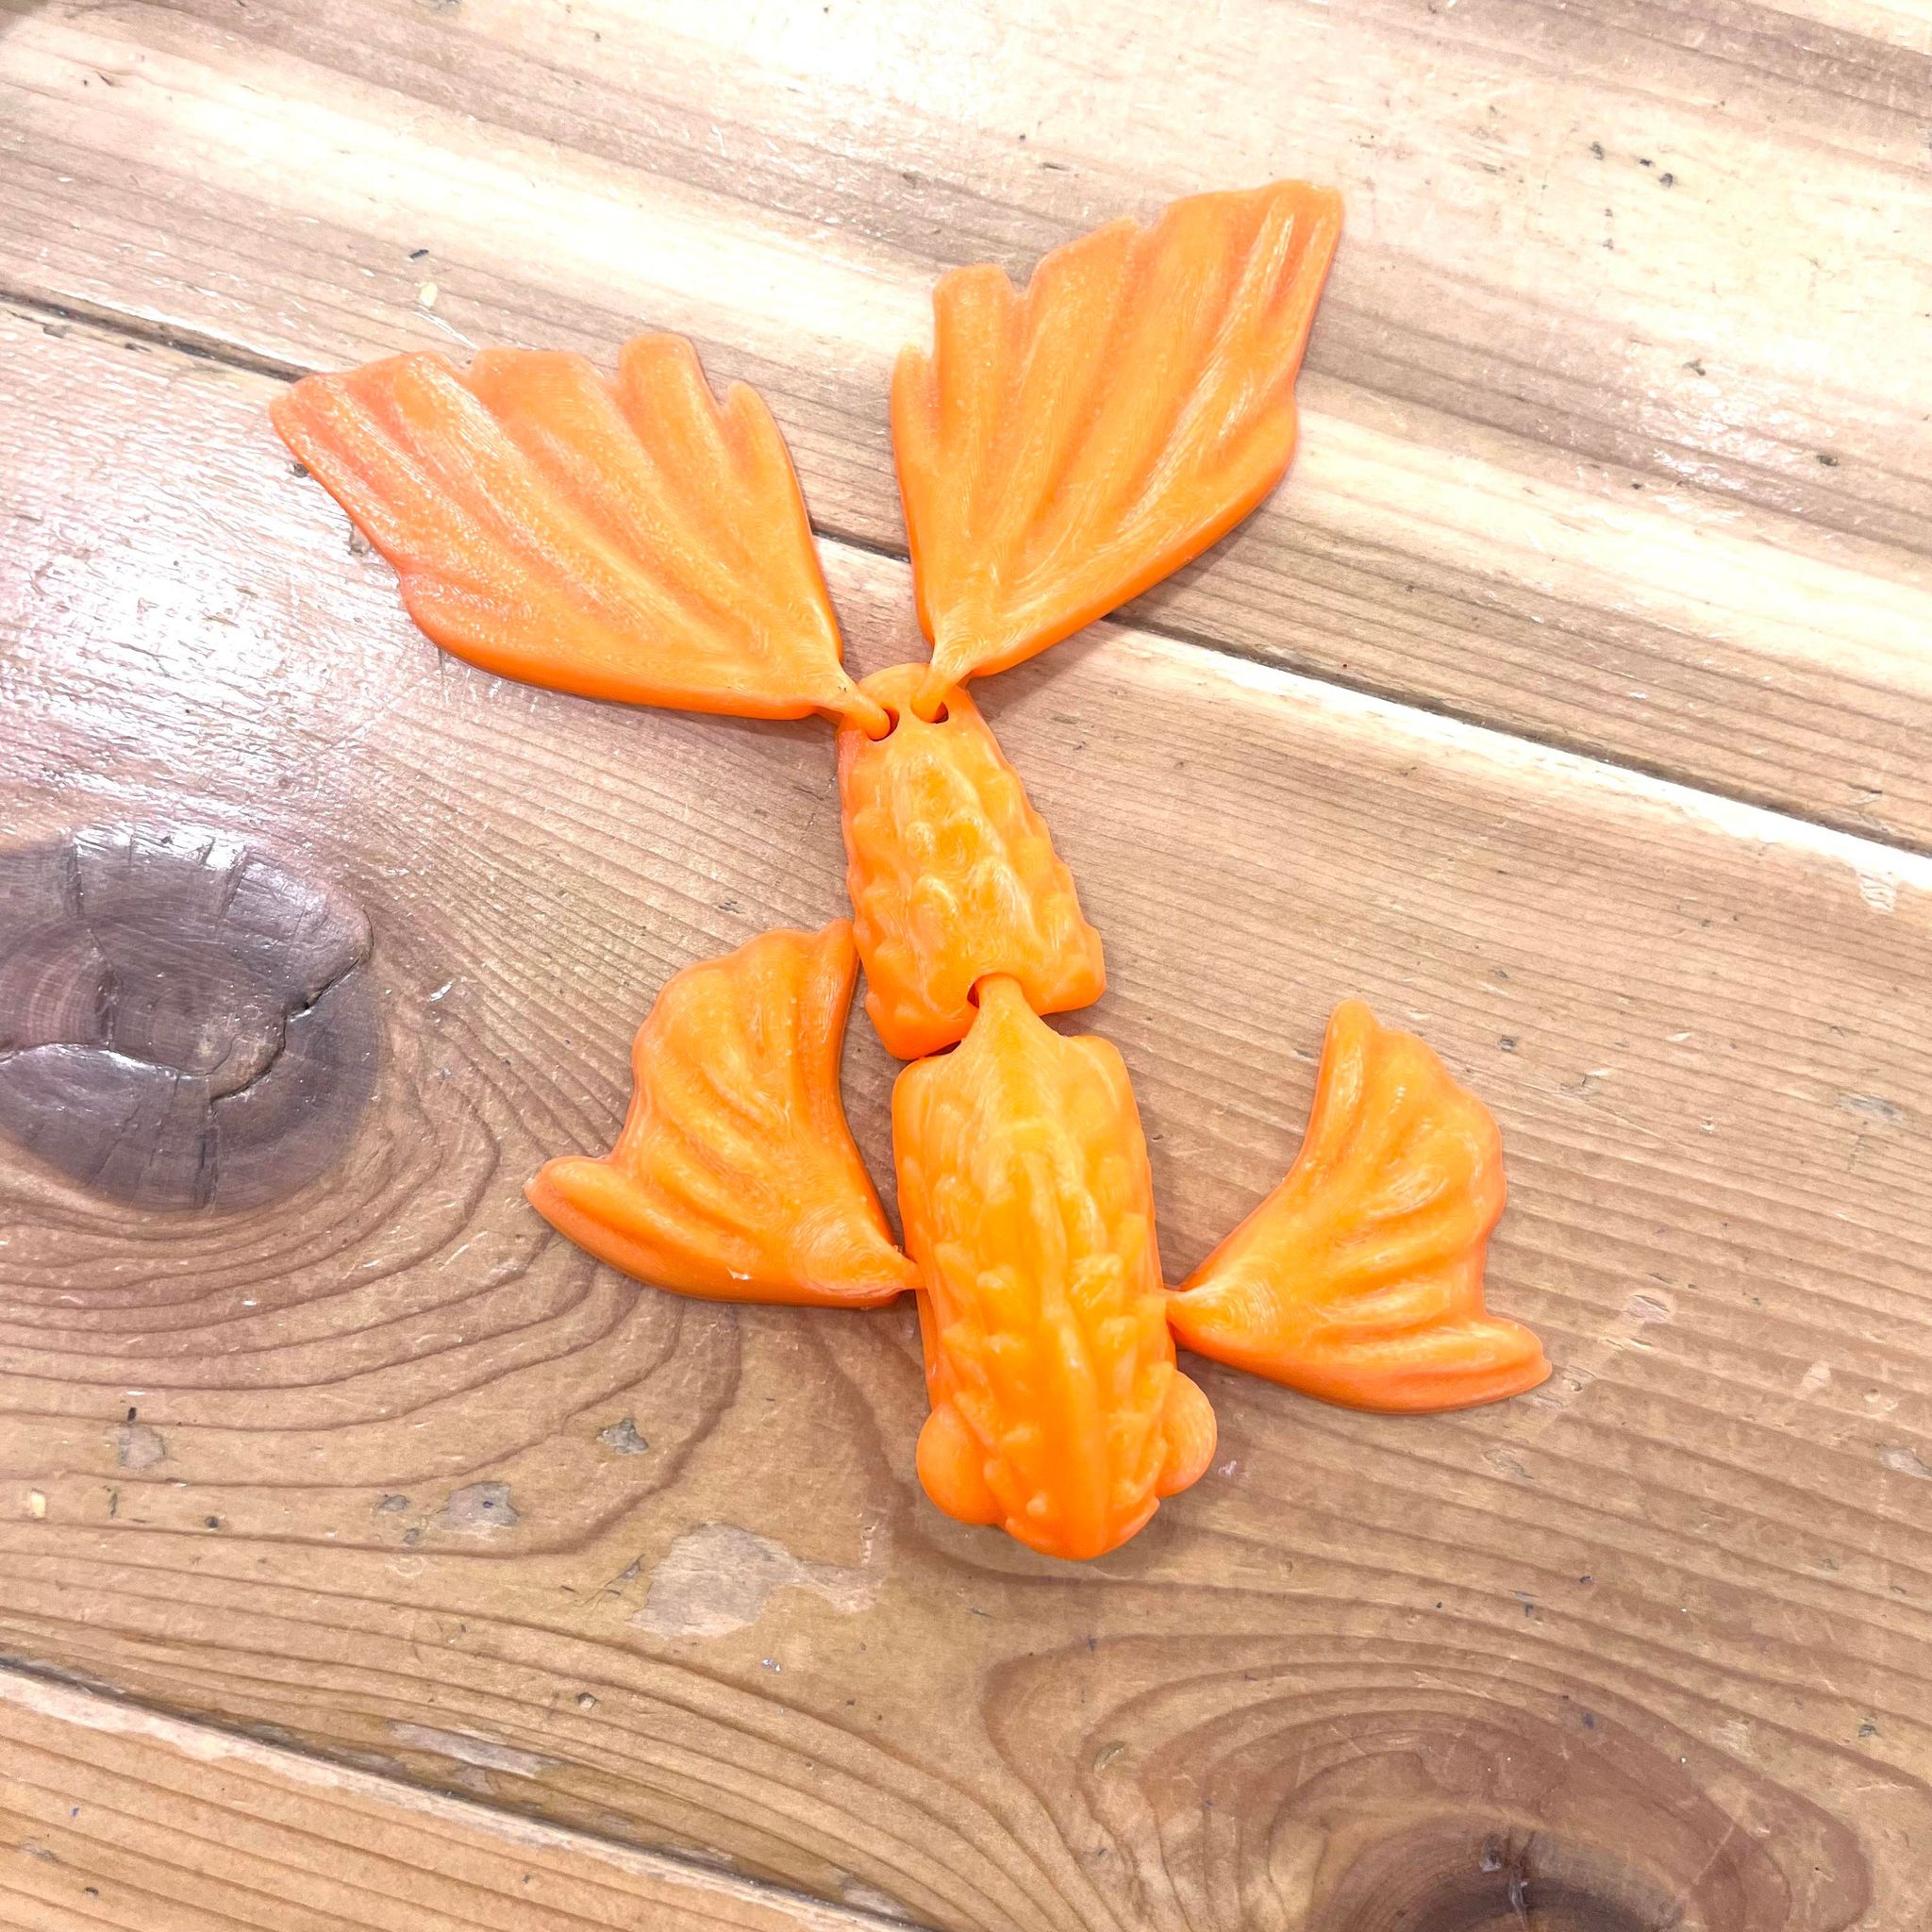 3D Printed Floating Fish